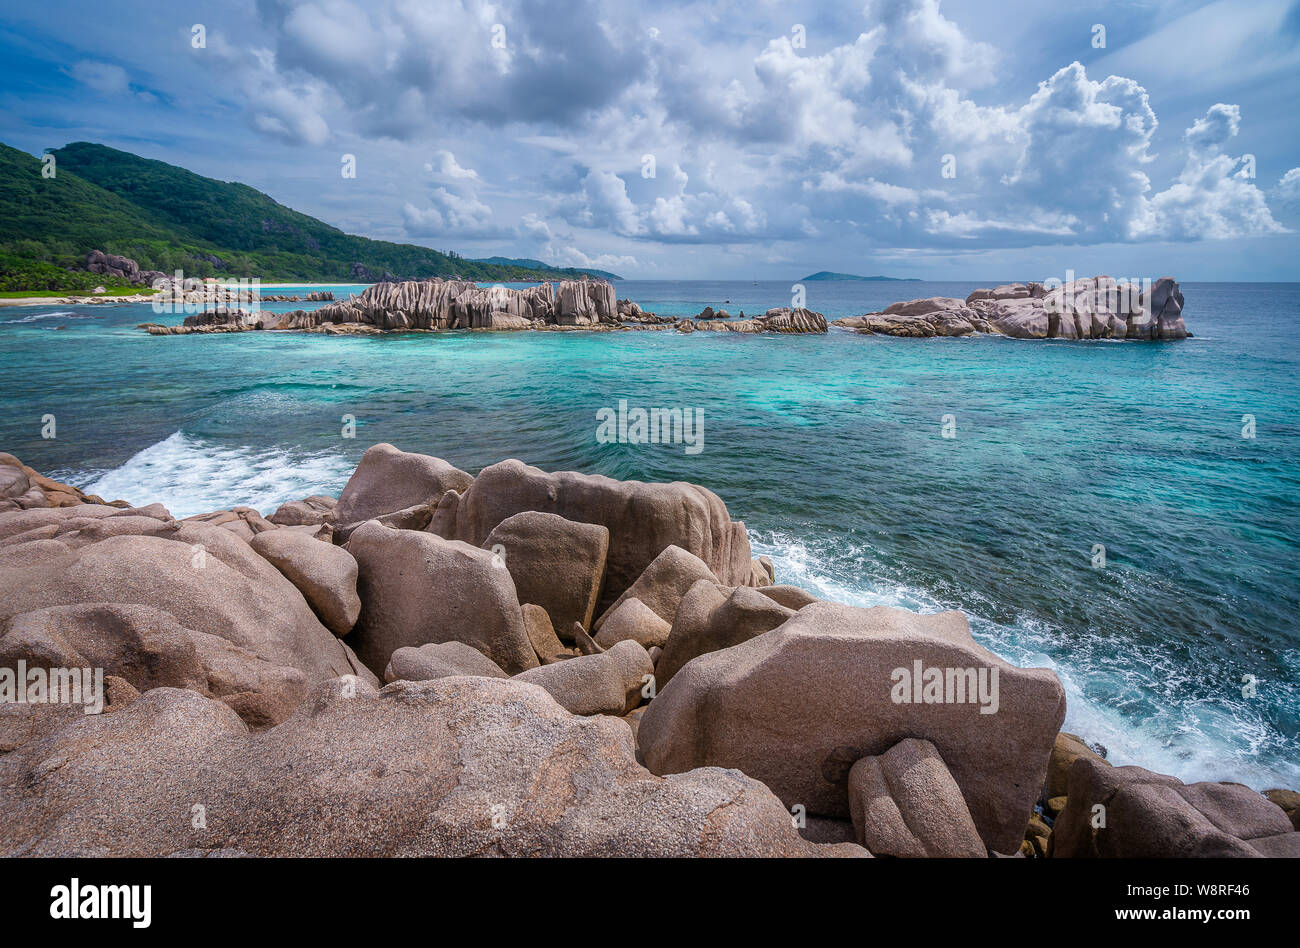 Seychelles picturesque coastline with granite rocks. Beauty in nature Stock Photo